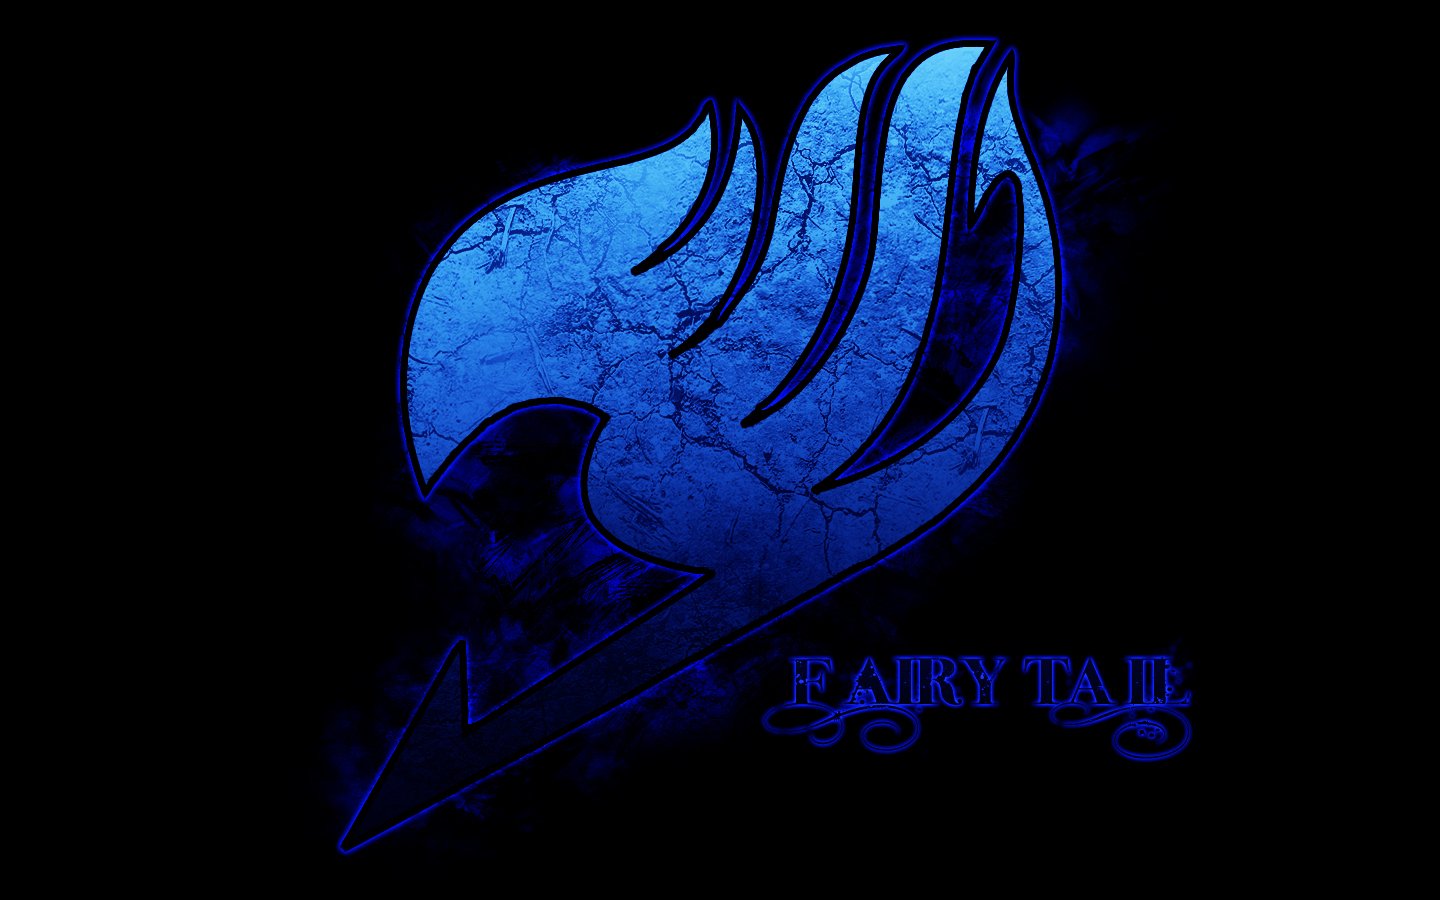 Fairy tail emblem wallpaper